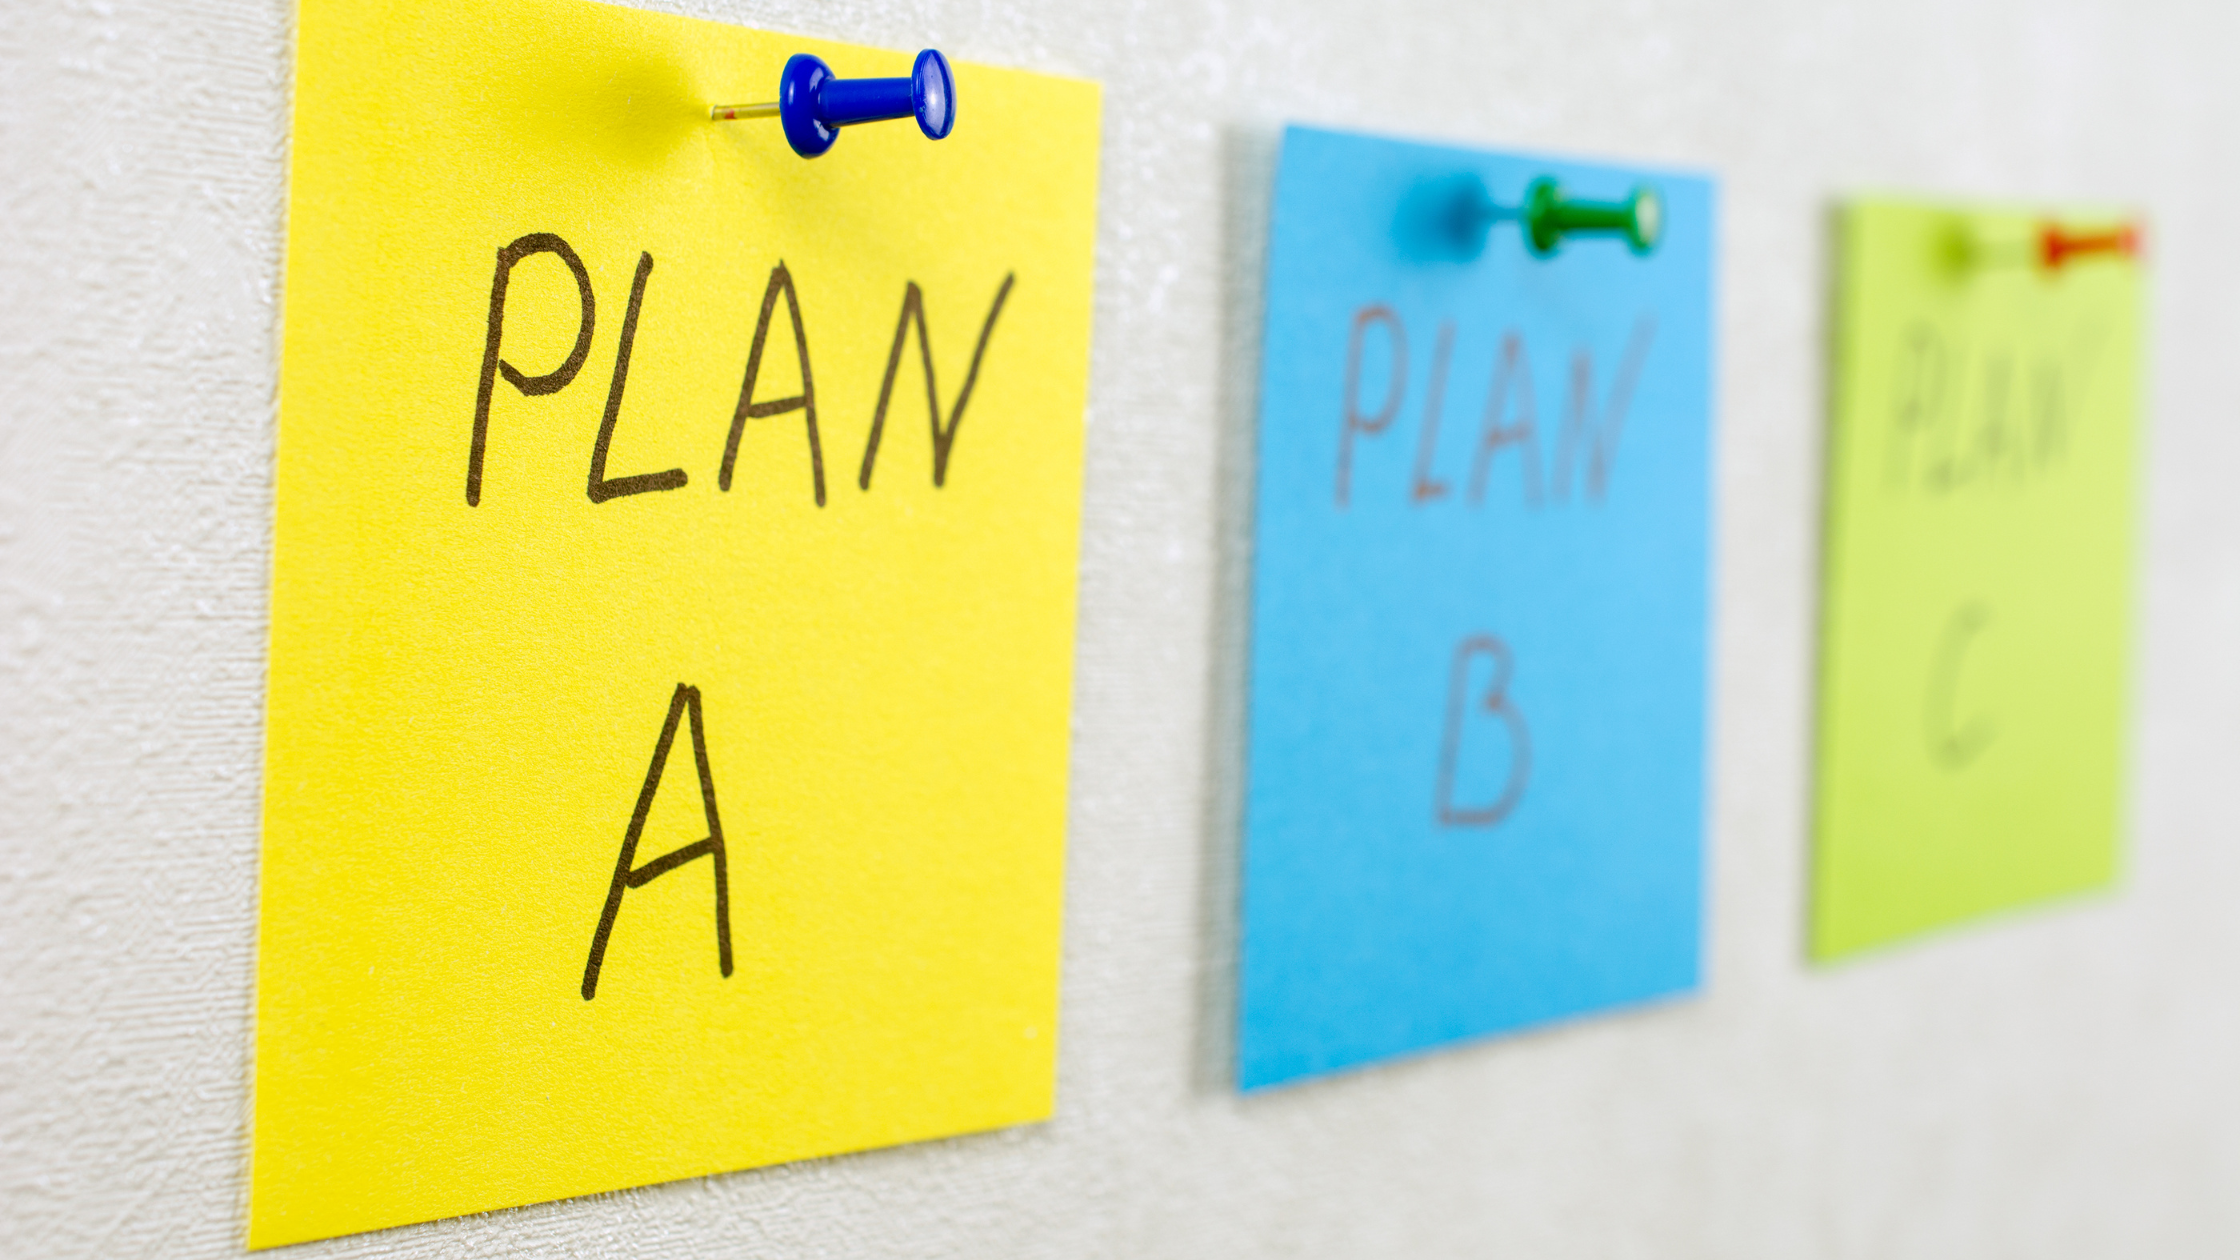 De kracht van één plan: Integrated Business Planning (IBP)